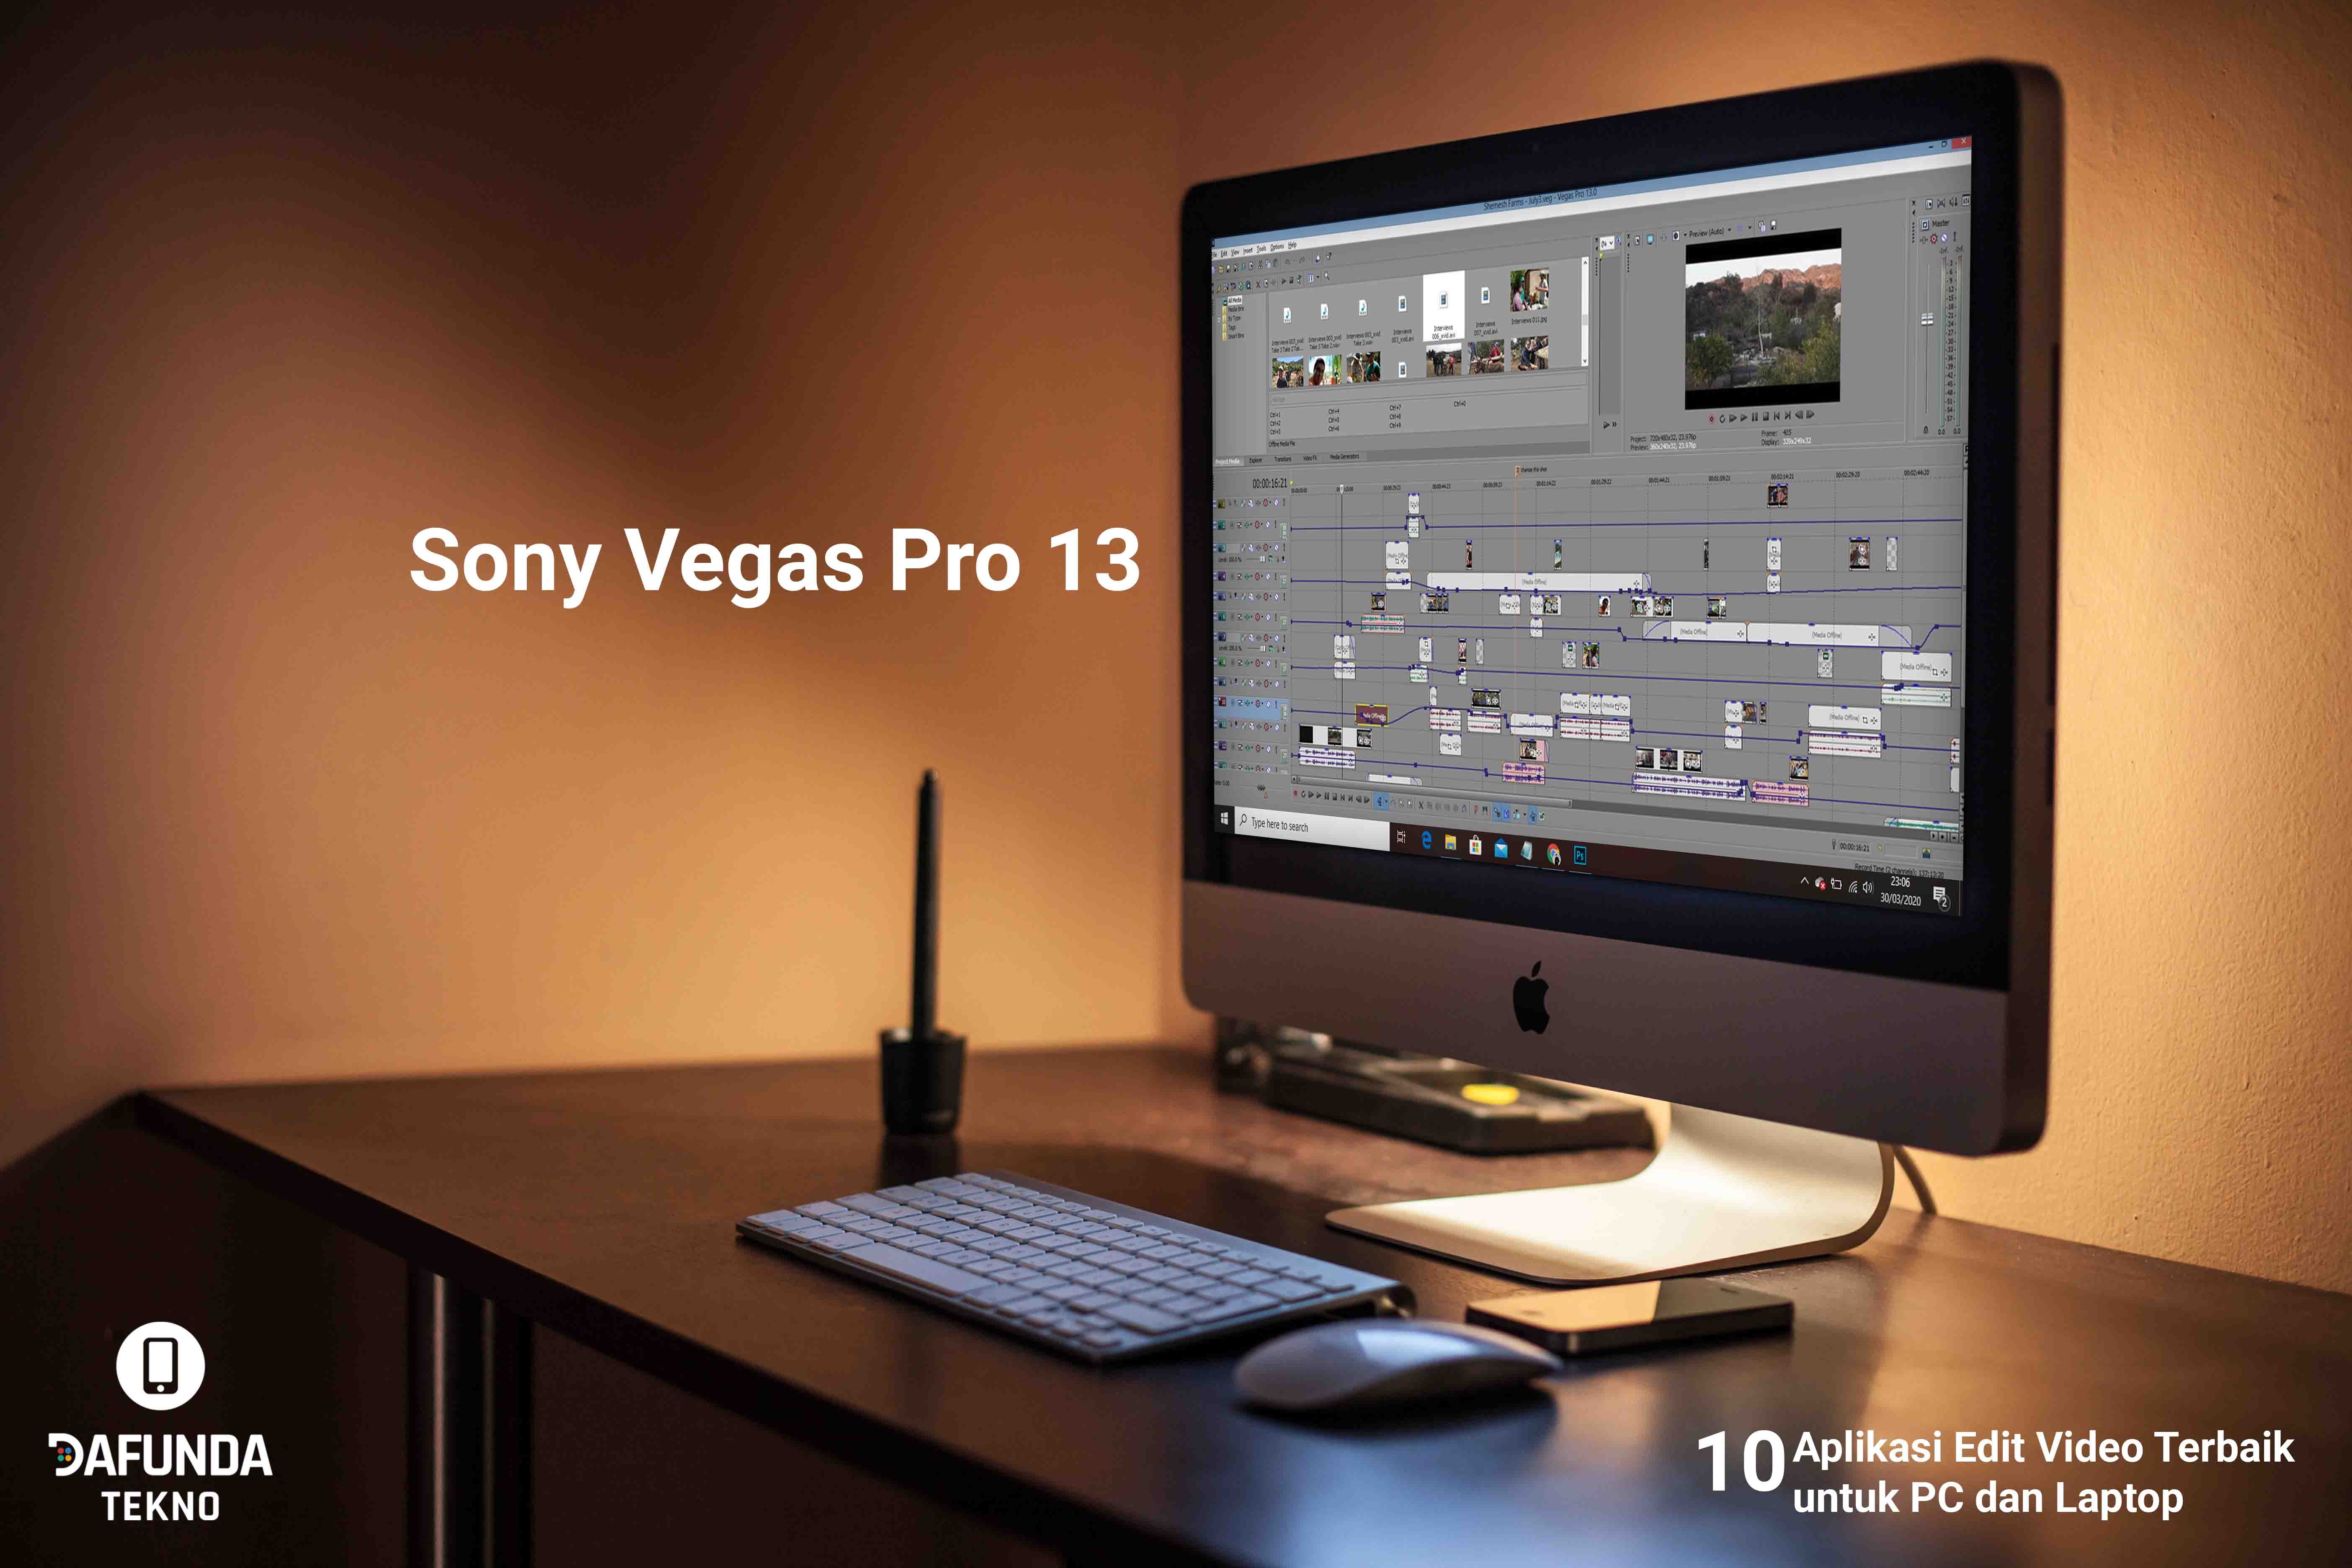 Aplikasi Edit Video Terbaik Untuk Pc Dan Laptop Sony Vegas Pro 13